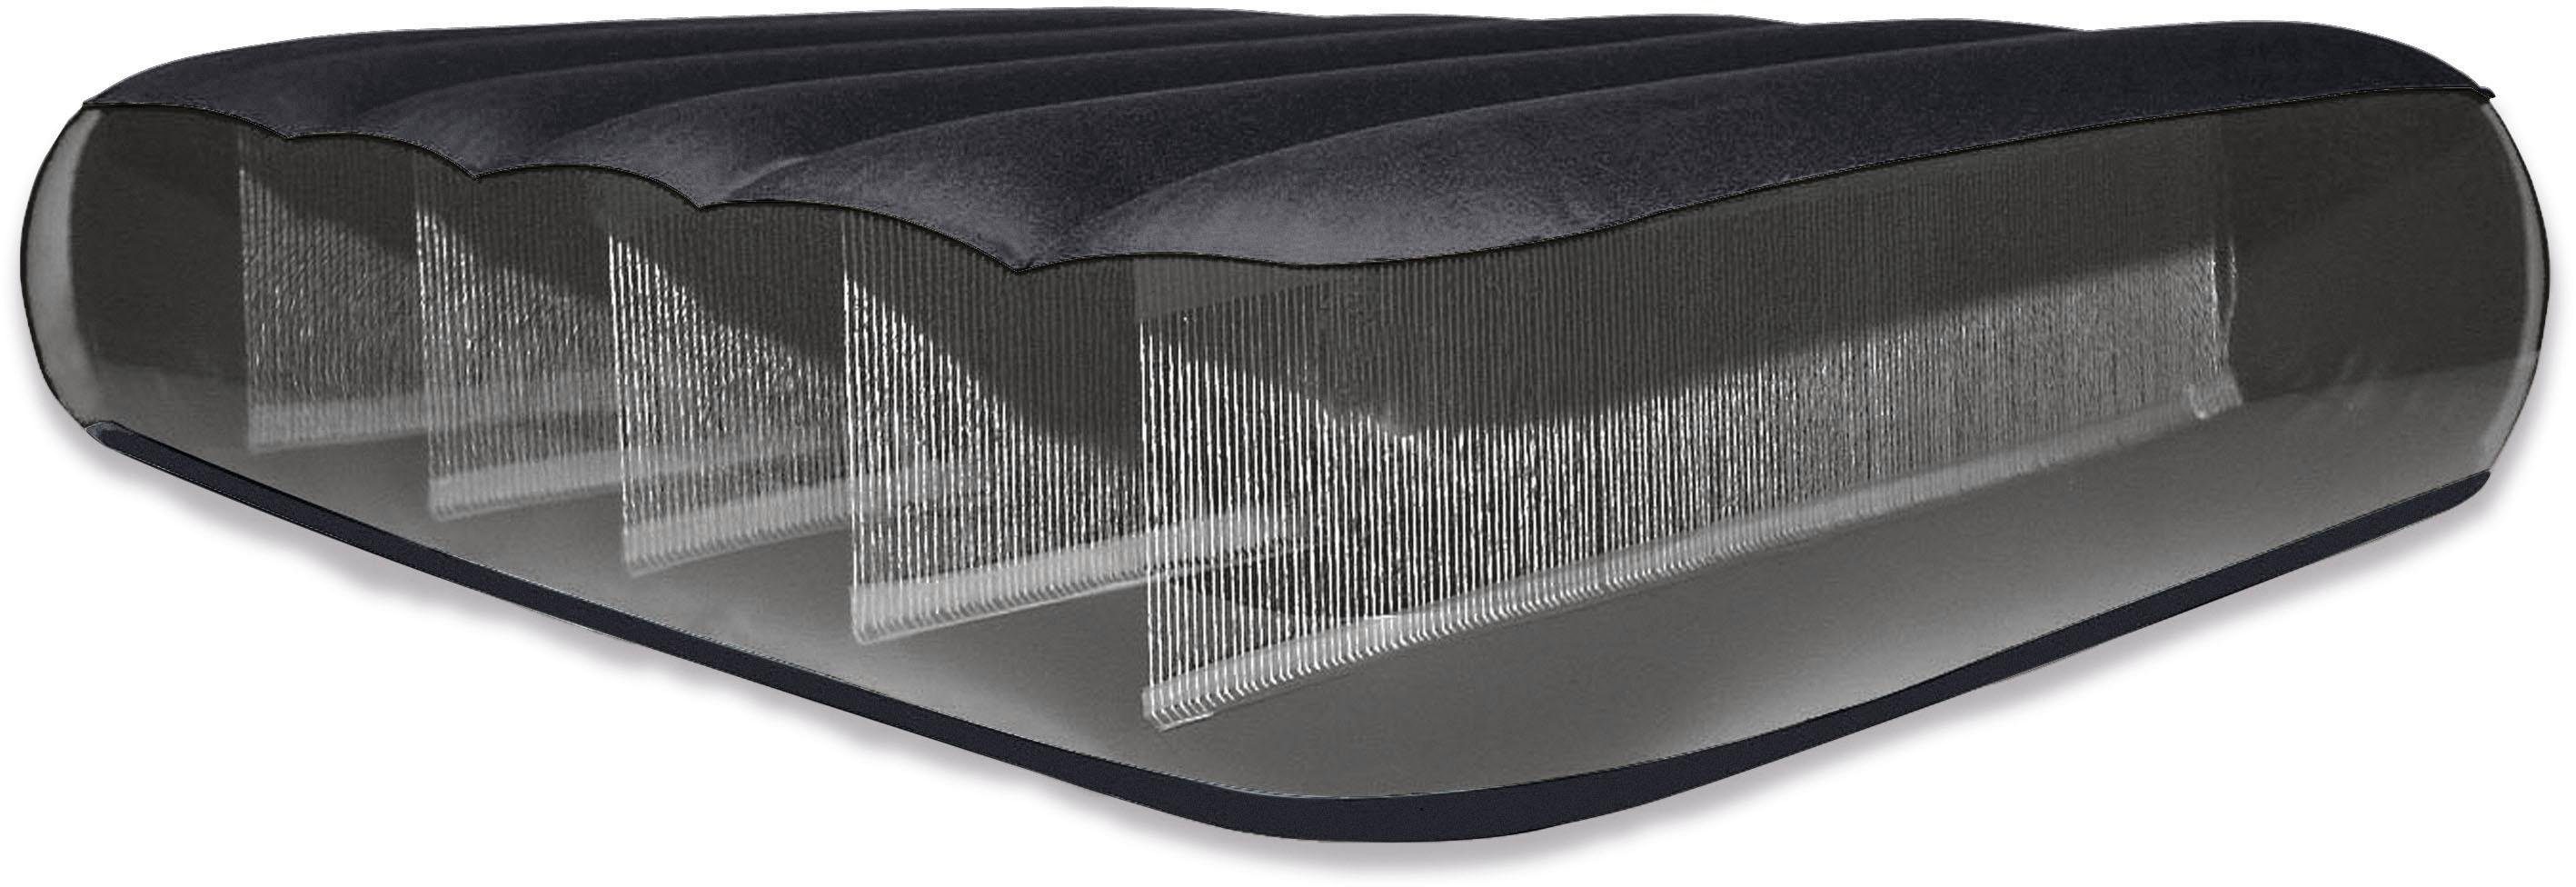 Luftbett Pillow Airbed Rest Intex Classic DURA-BEAM®